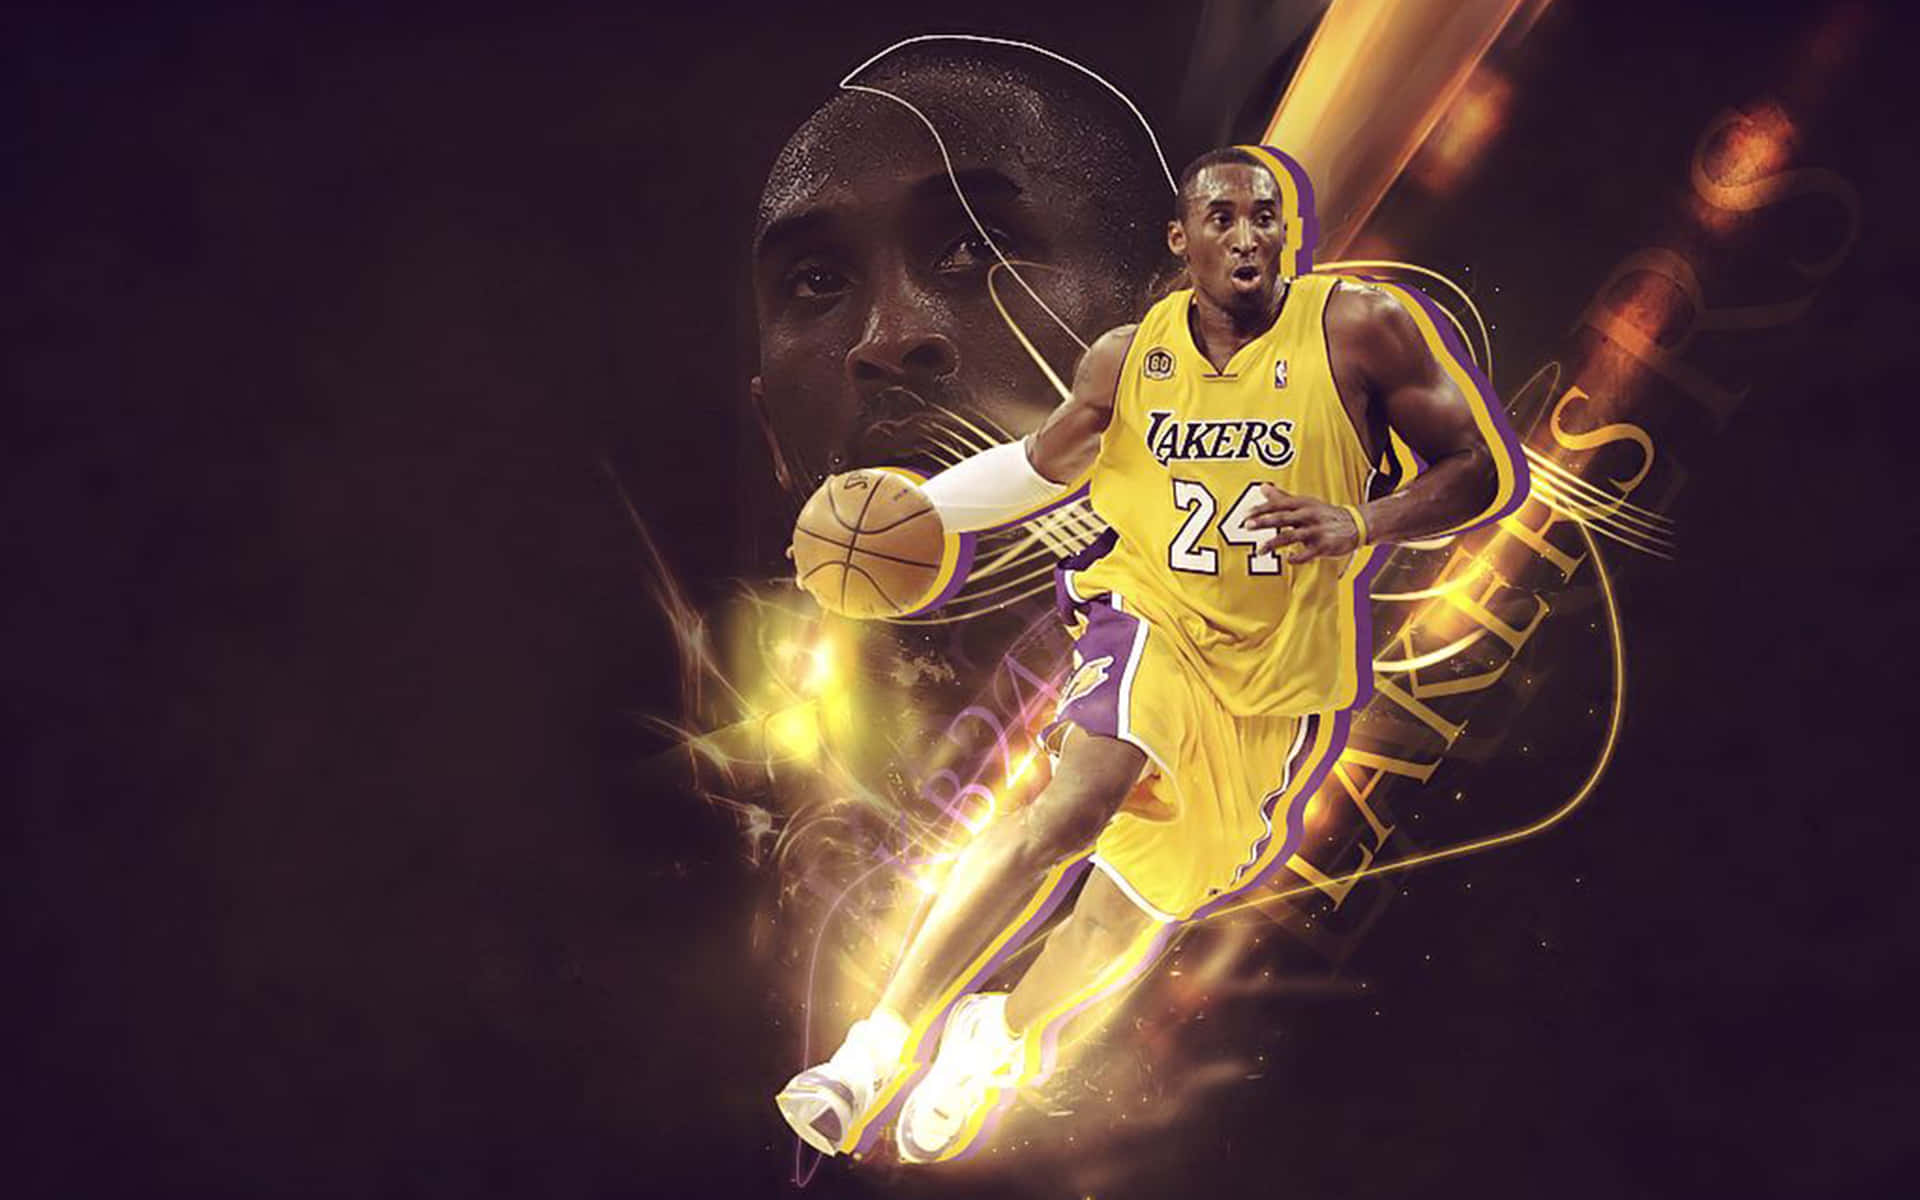 Losangeles Lakers Legend Kobe Bryant - Los Angeles Lakers Legend Kobe Bryant